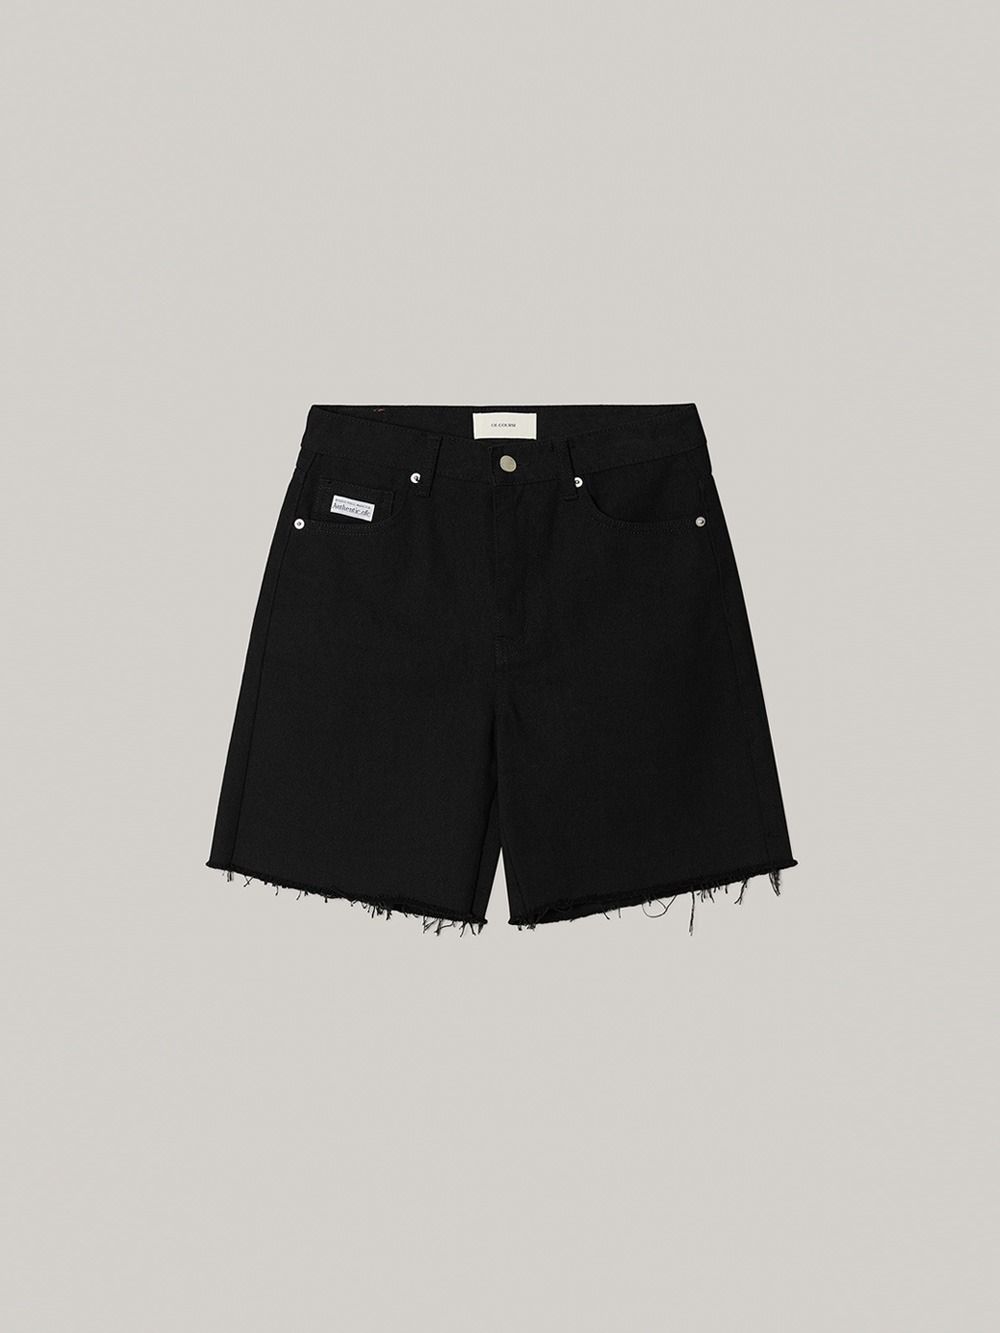 Raw Cut Cotton Shorts (black)